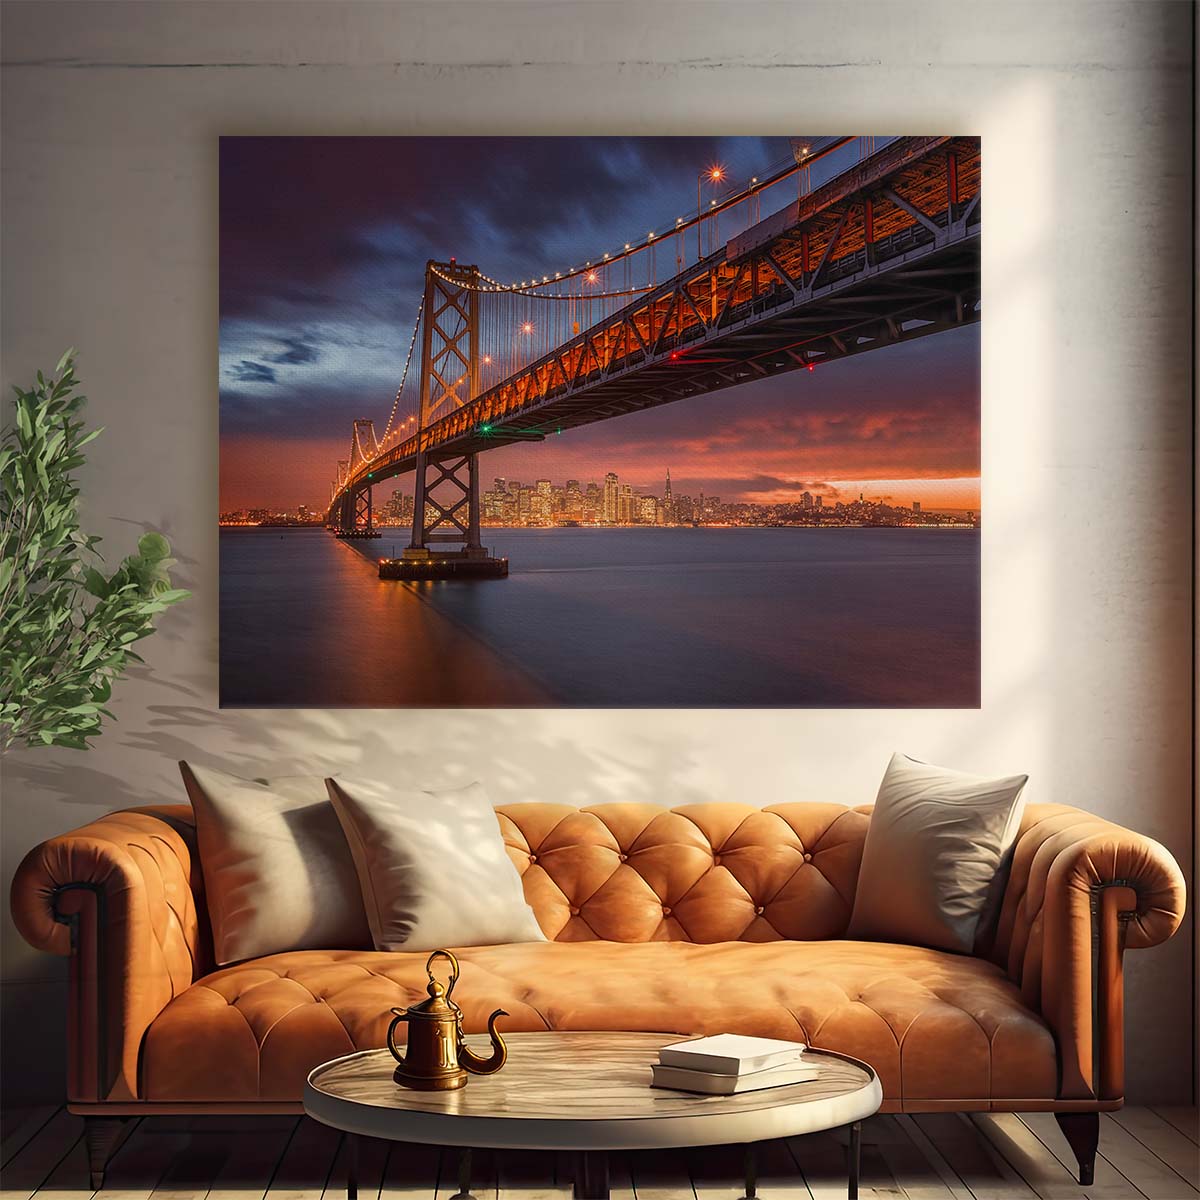 San Francisco Golden Gate Bridge Sunset Wall Art by Luxuriance Designs. Made in USA.